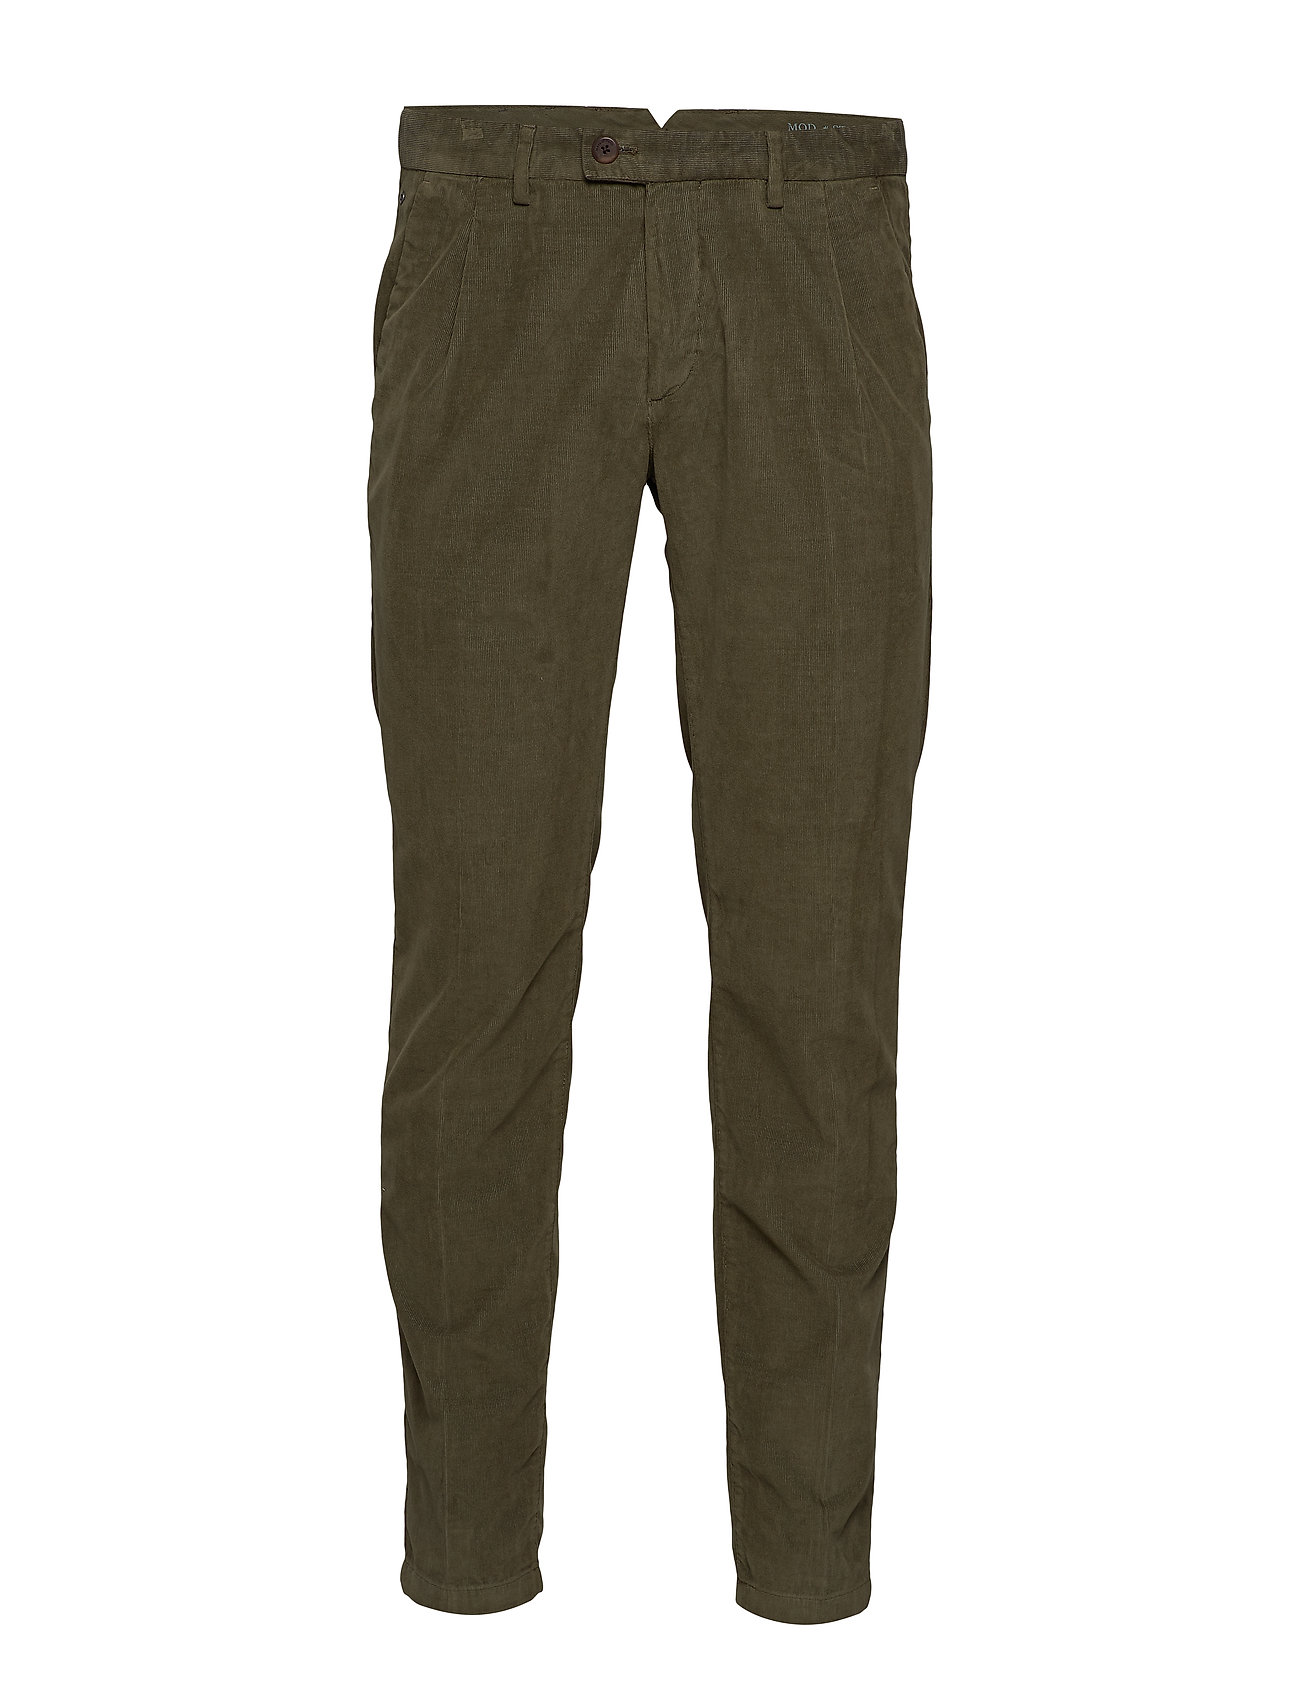 Marc O'Polo Woven Pants Chinos Byxor Grön [Color: GRAPE LEAF ][Sex: Men ][Sizes: 30 x 32,32 32,33 32,36 32 ]